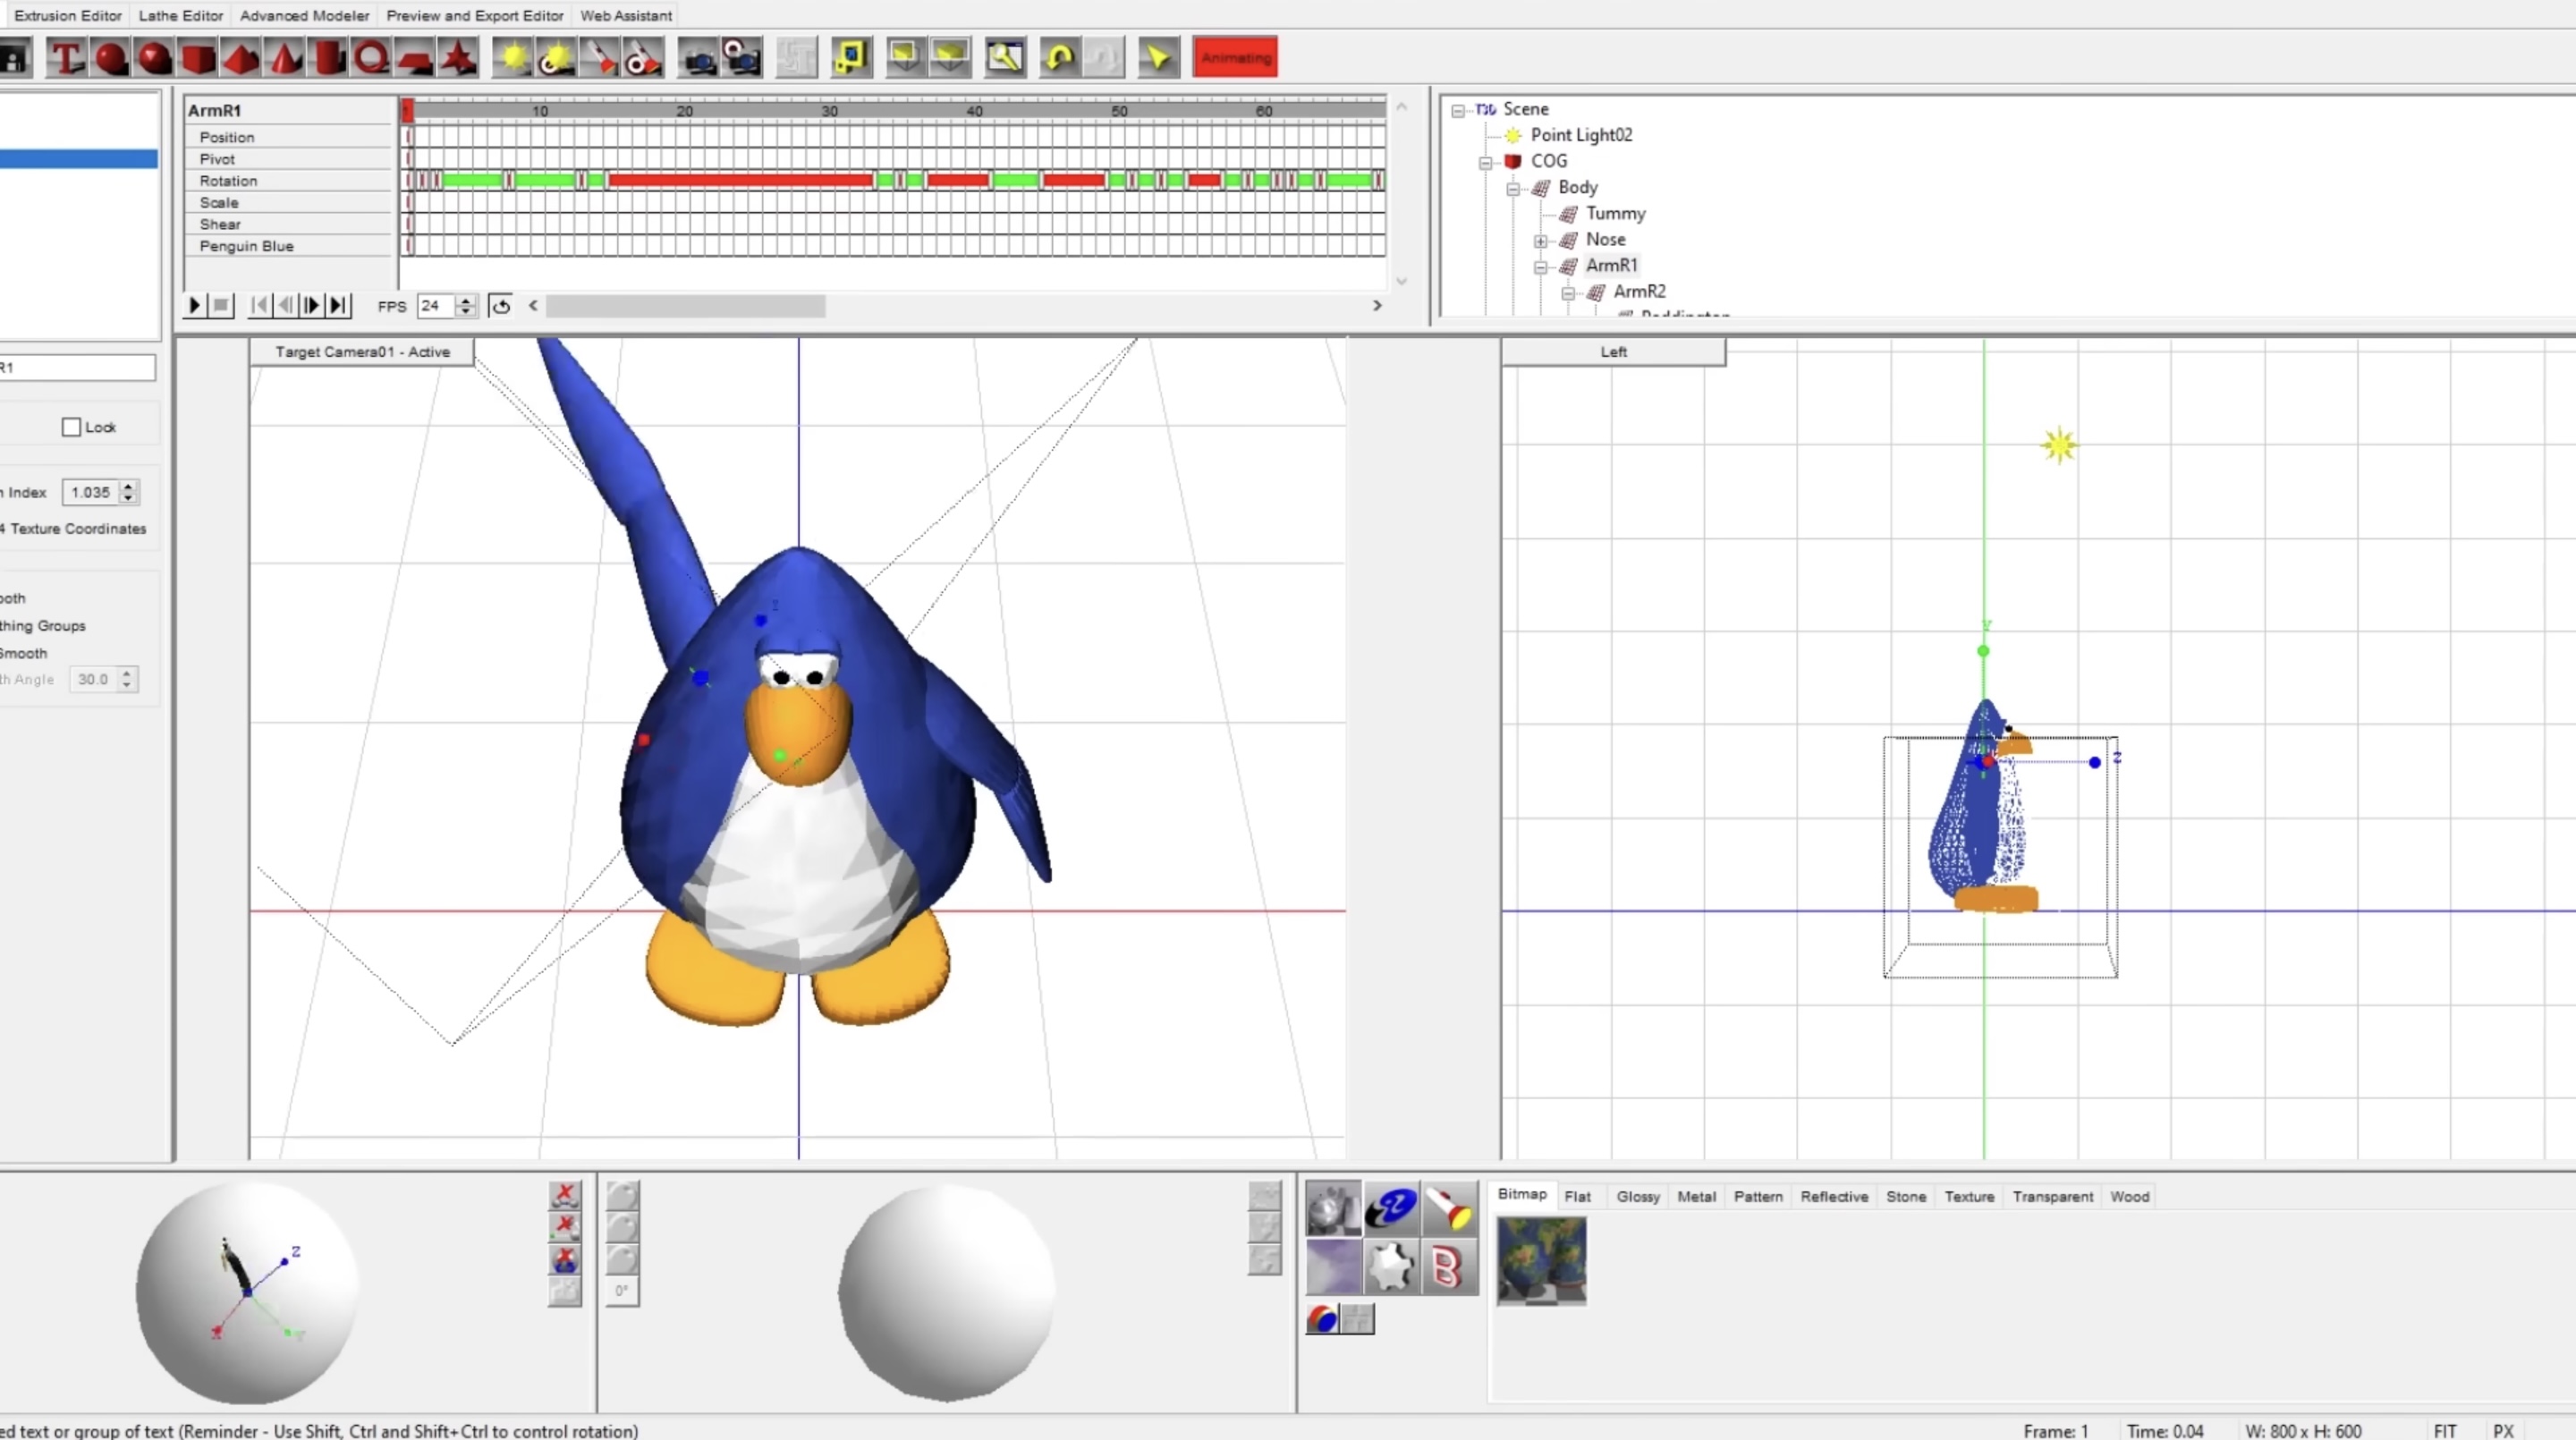 Club Penguin, Software